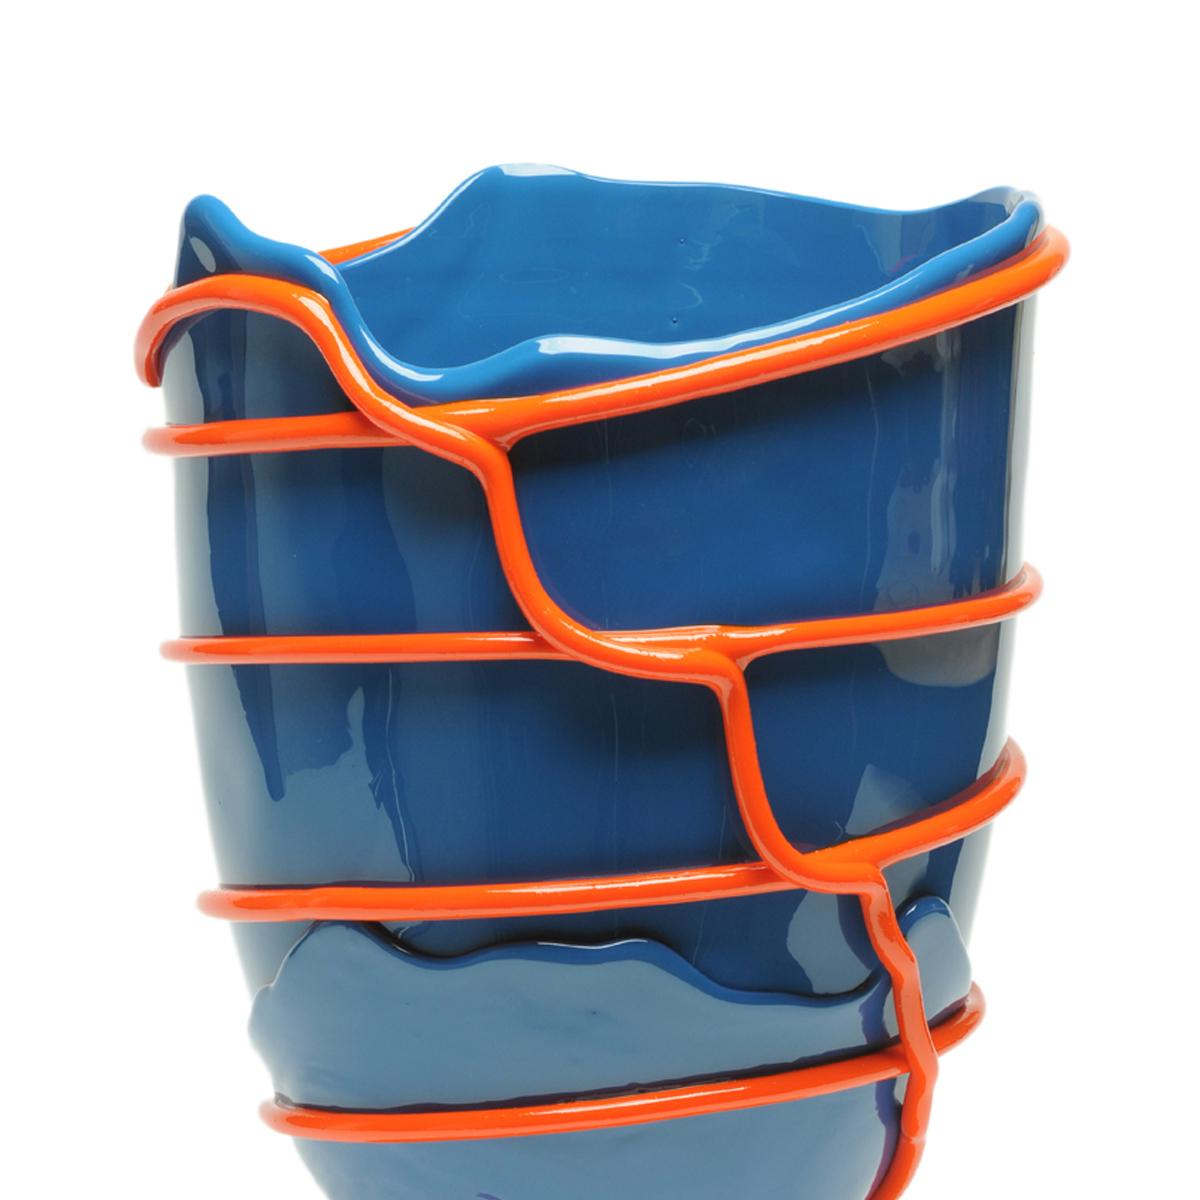 Pompitu II vase, blue, orange.

Vase in soft resin designed by Gaetano Pesce in 1995 for Fish Design collection.

Measures: L - ø 22cm x H 36cm

Other sizes available

Colours: Blue, orange.
Vase in soft resin designed by Gaetano Pesce in